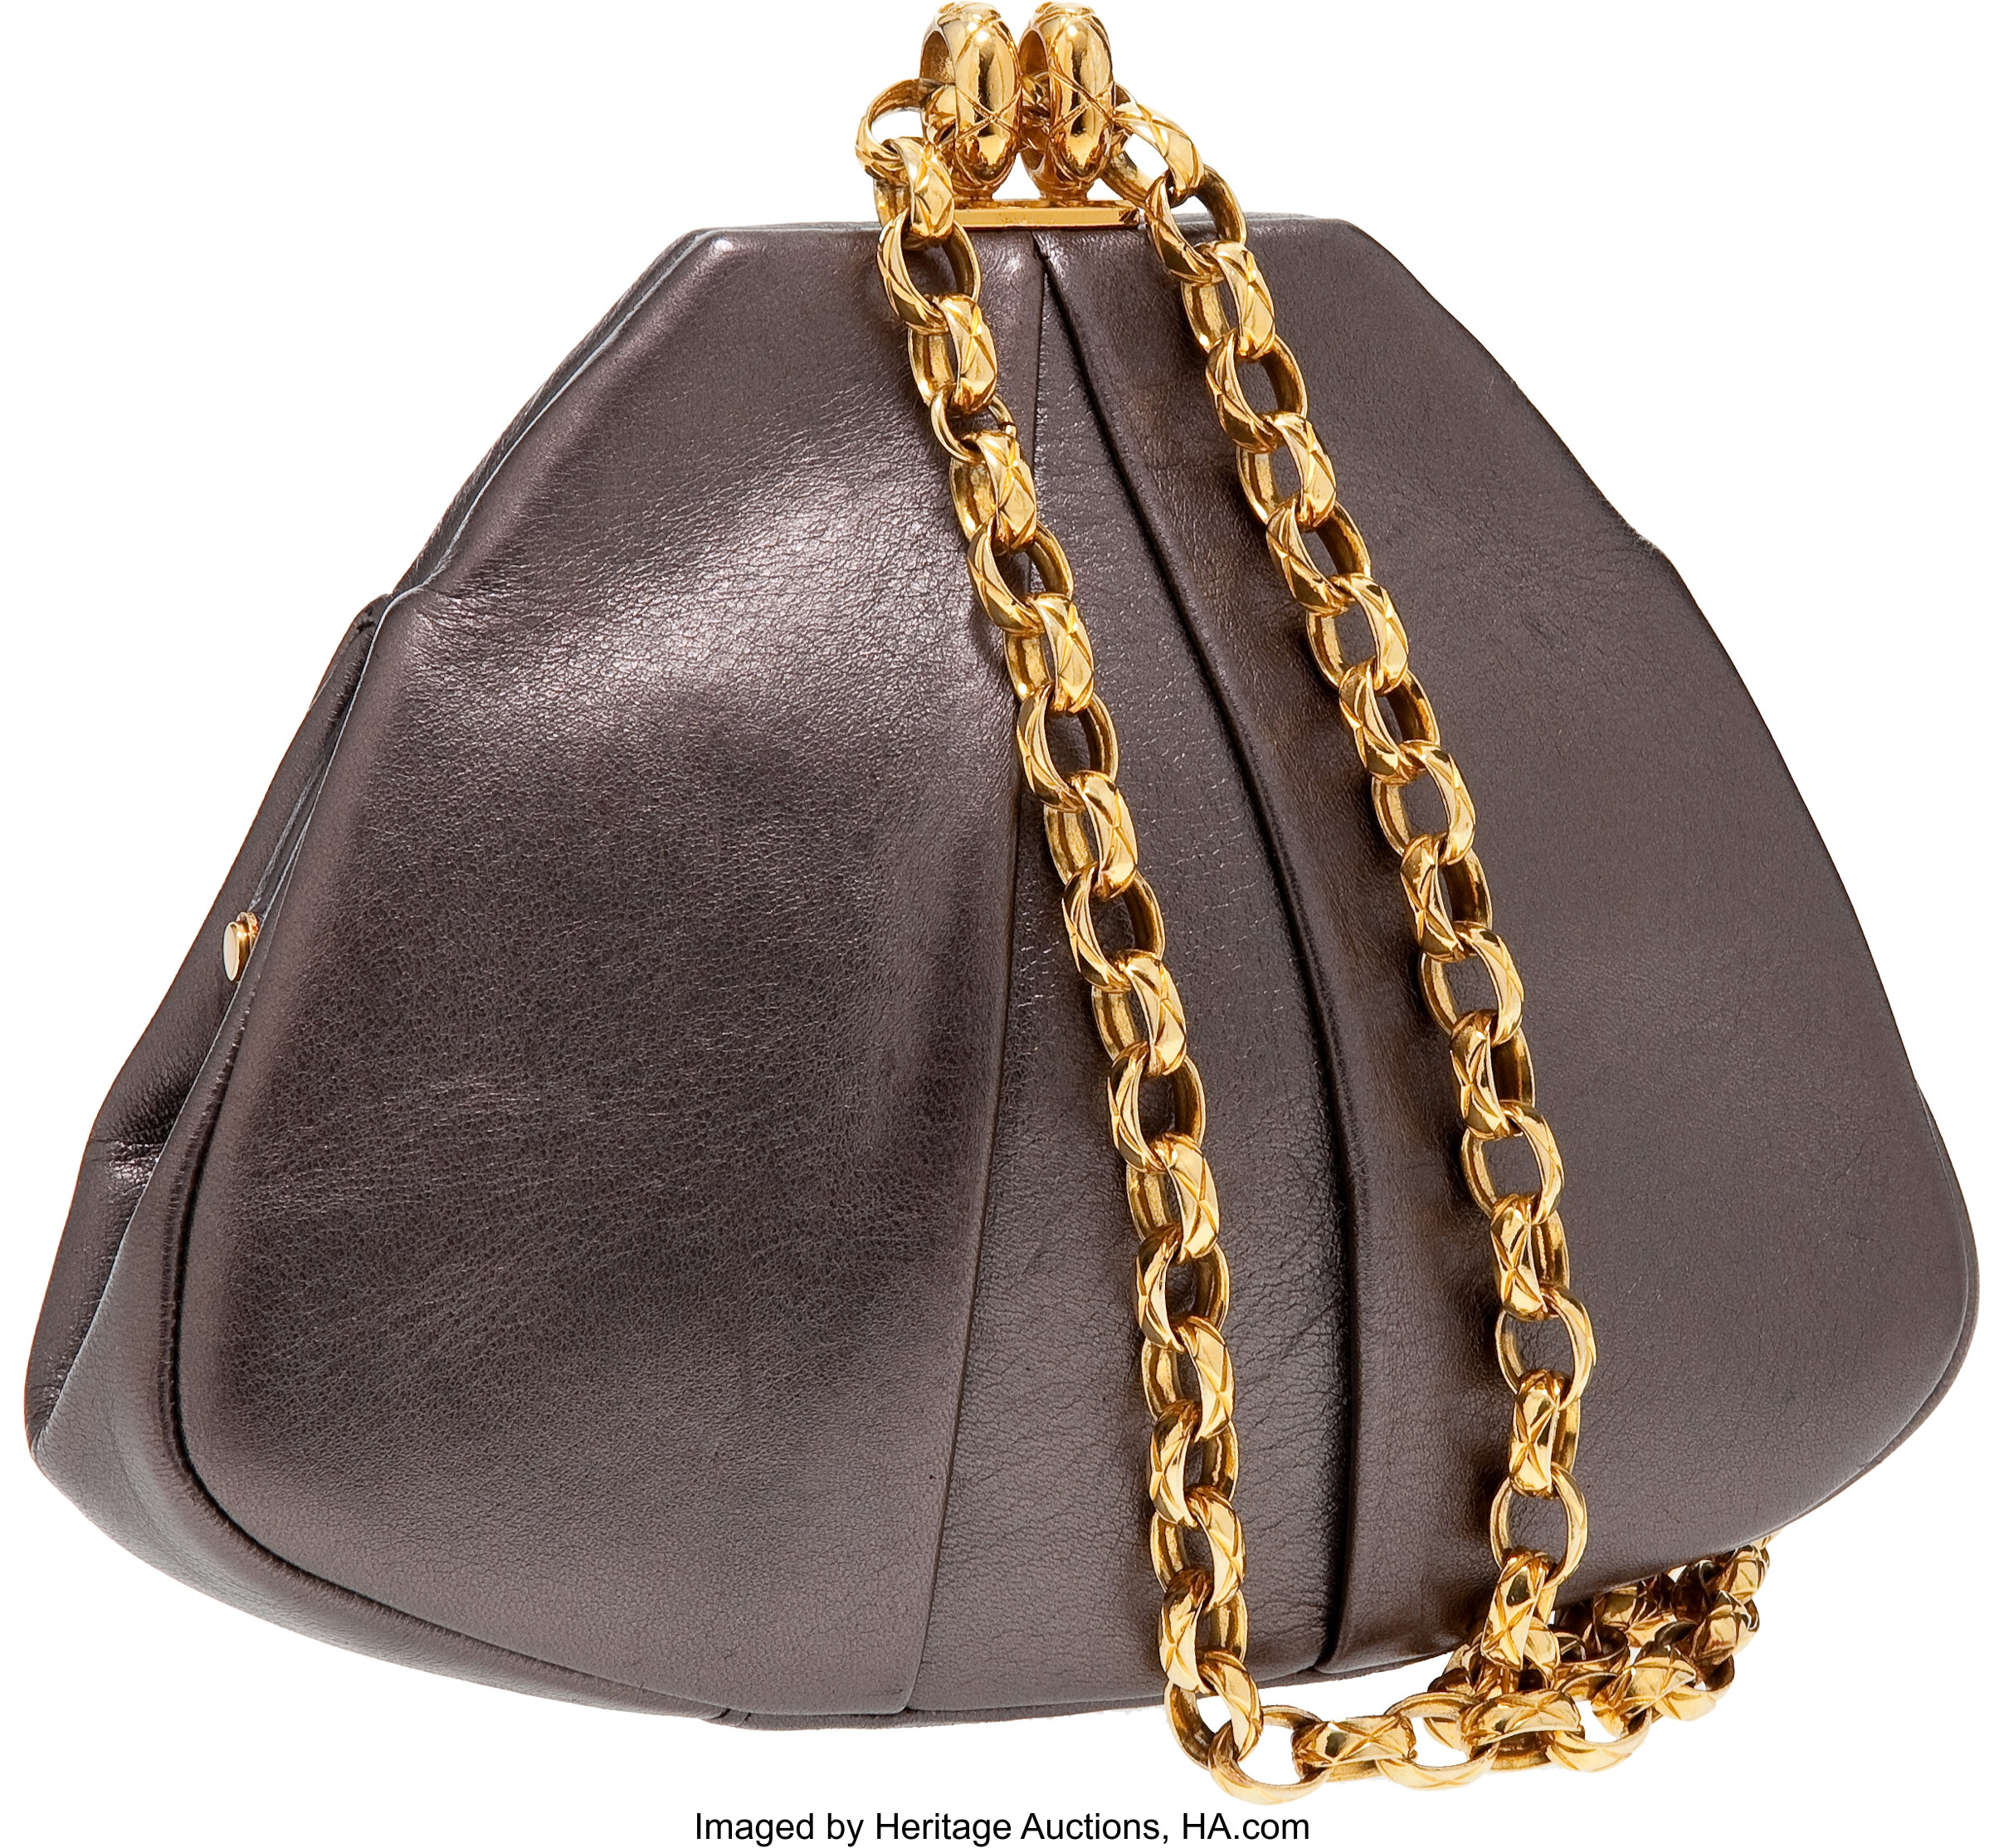 Chanel Medium Mondrian Colorblock Flap Bag